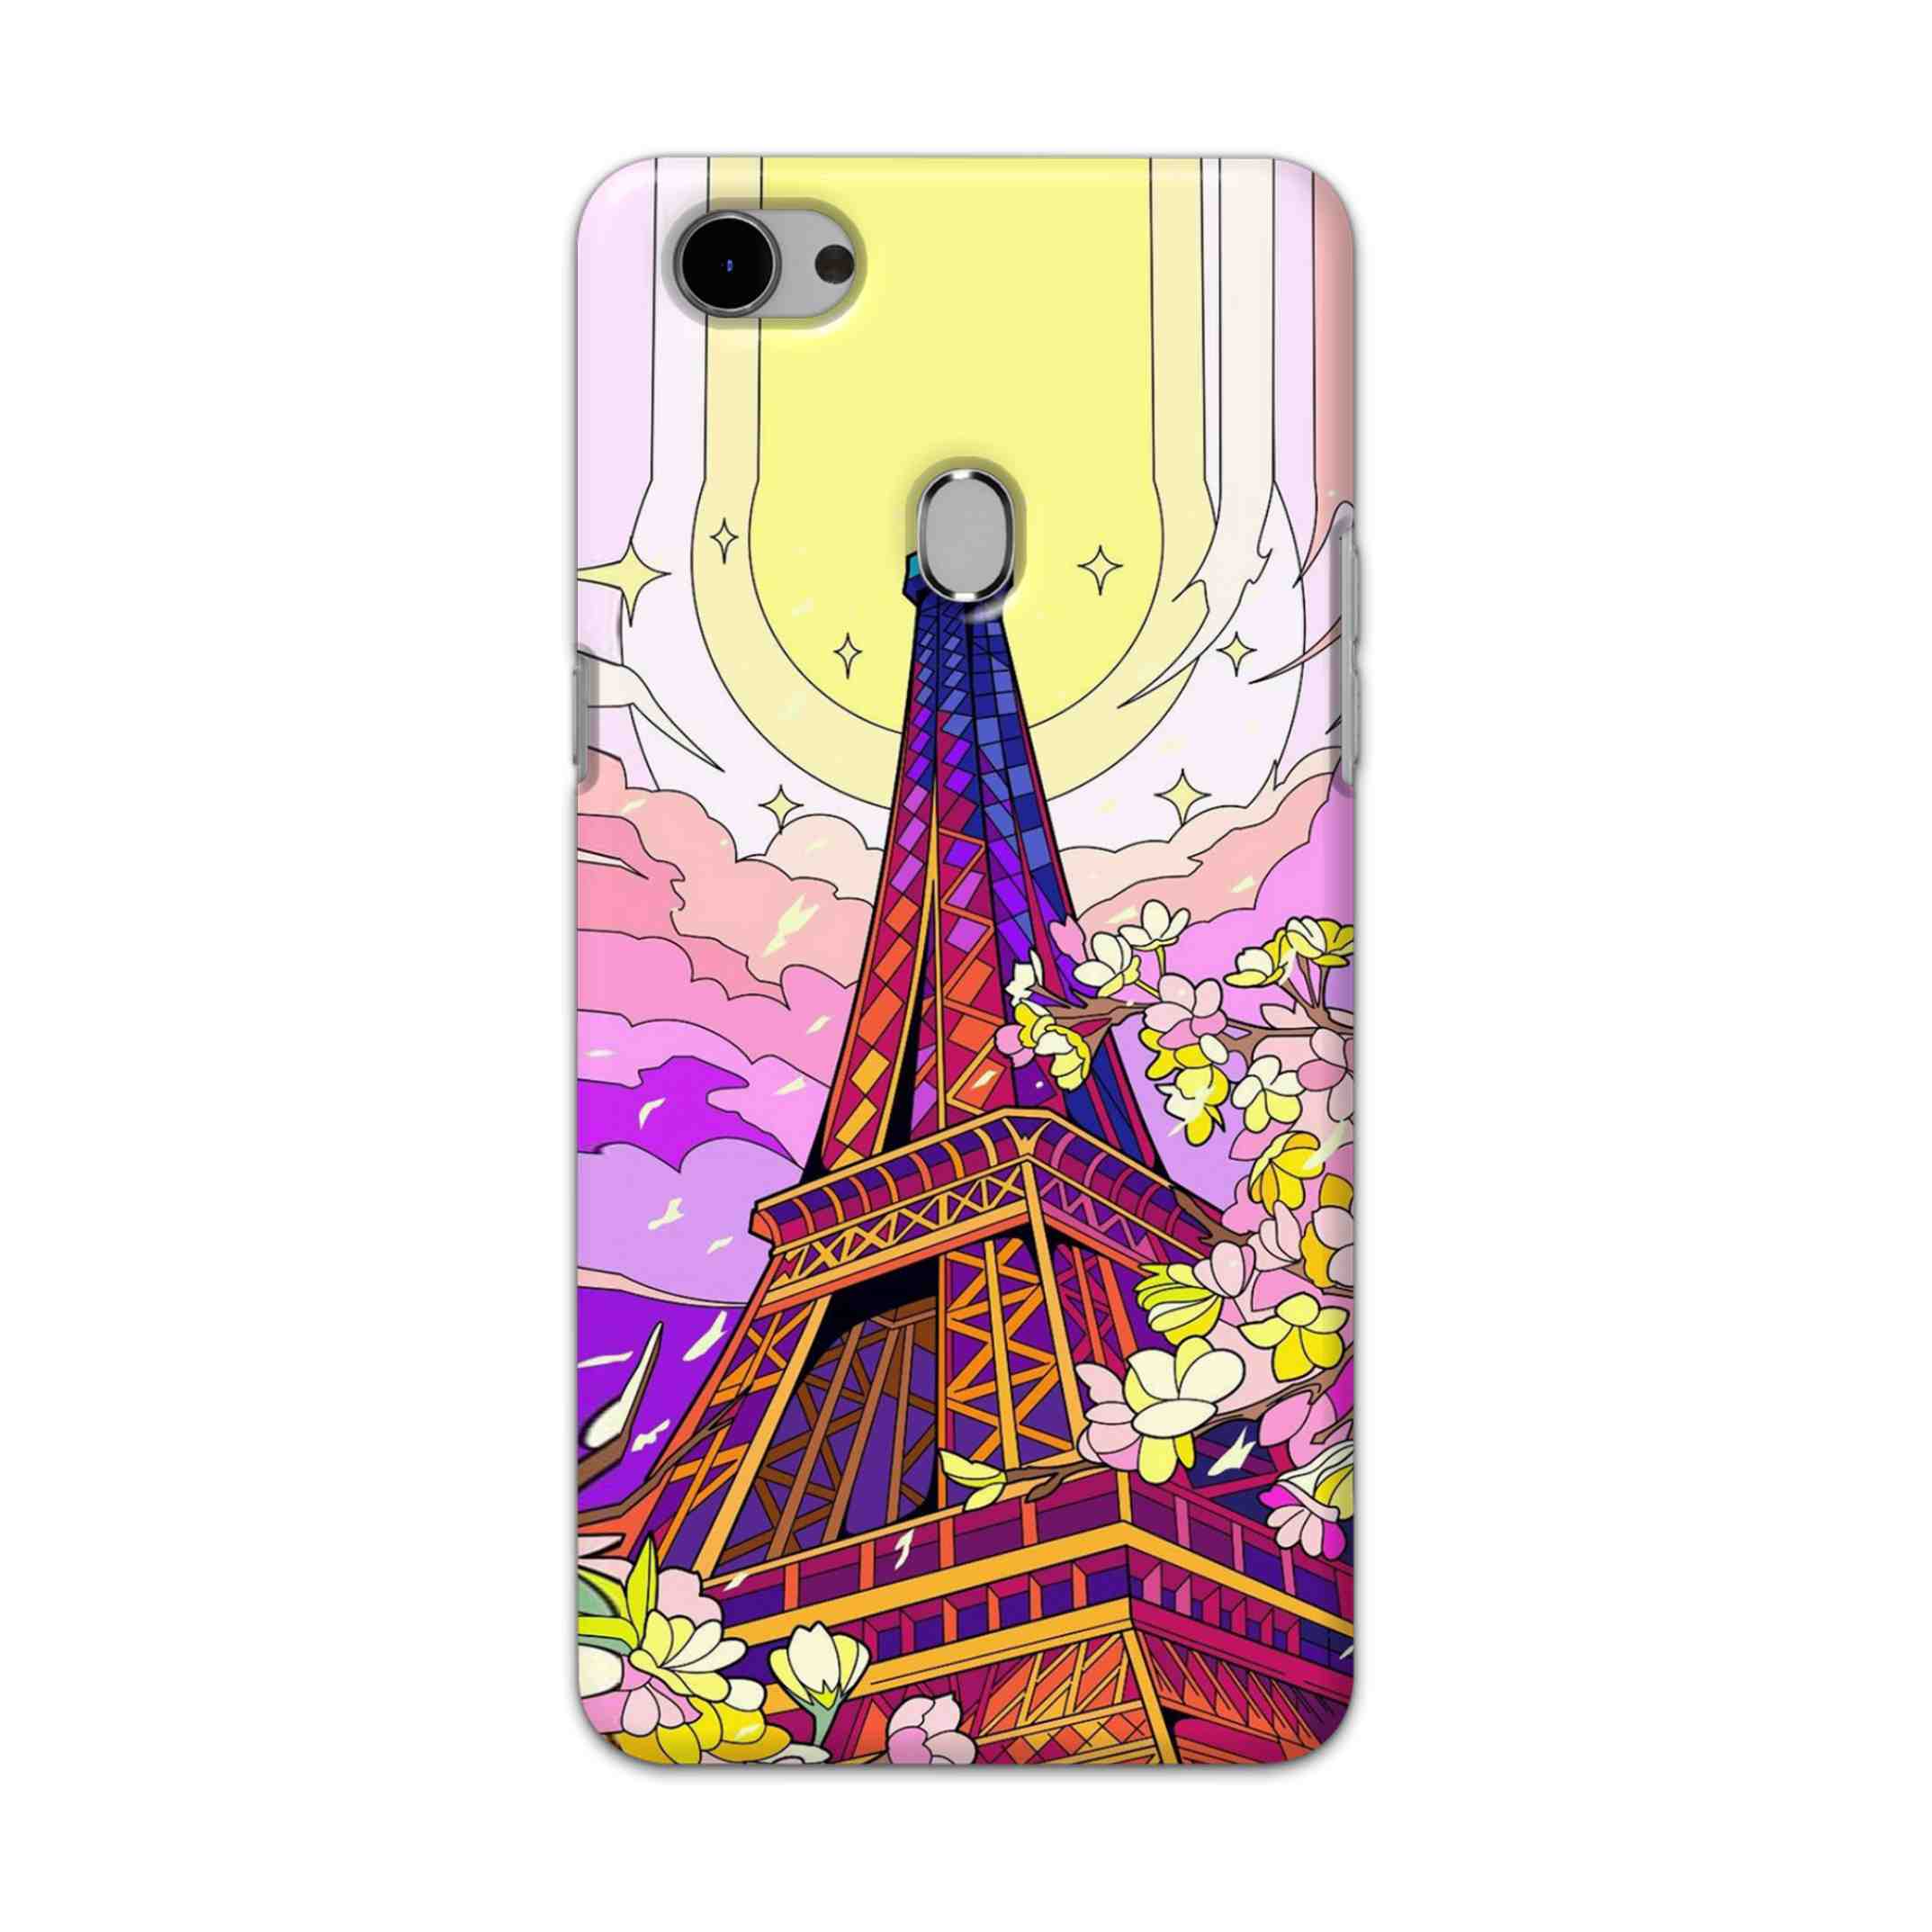 Buy Eiffel Tower Hard Back Mobile Phone Case Cover For Oppo F7 Online